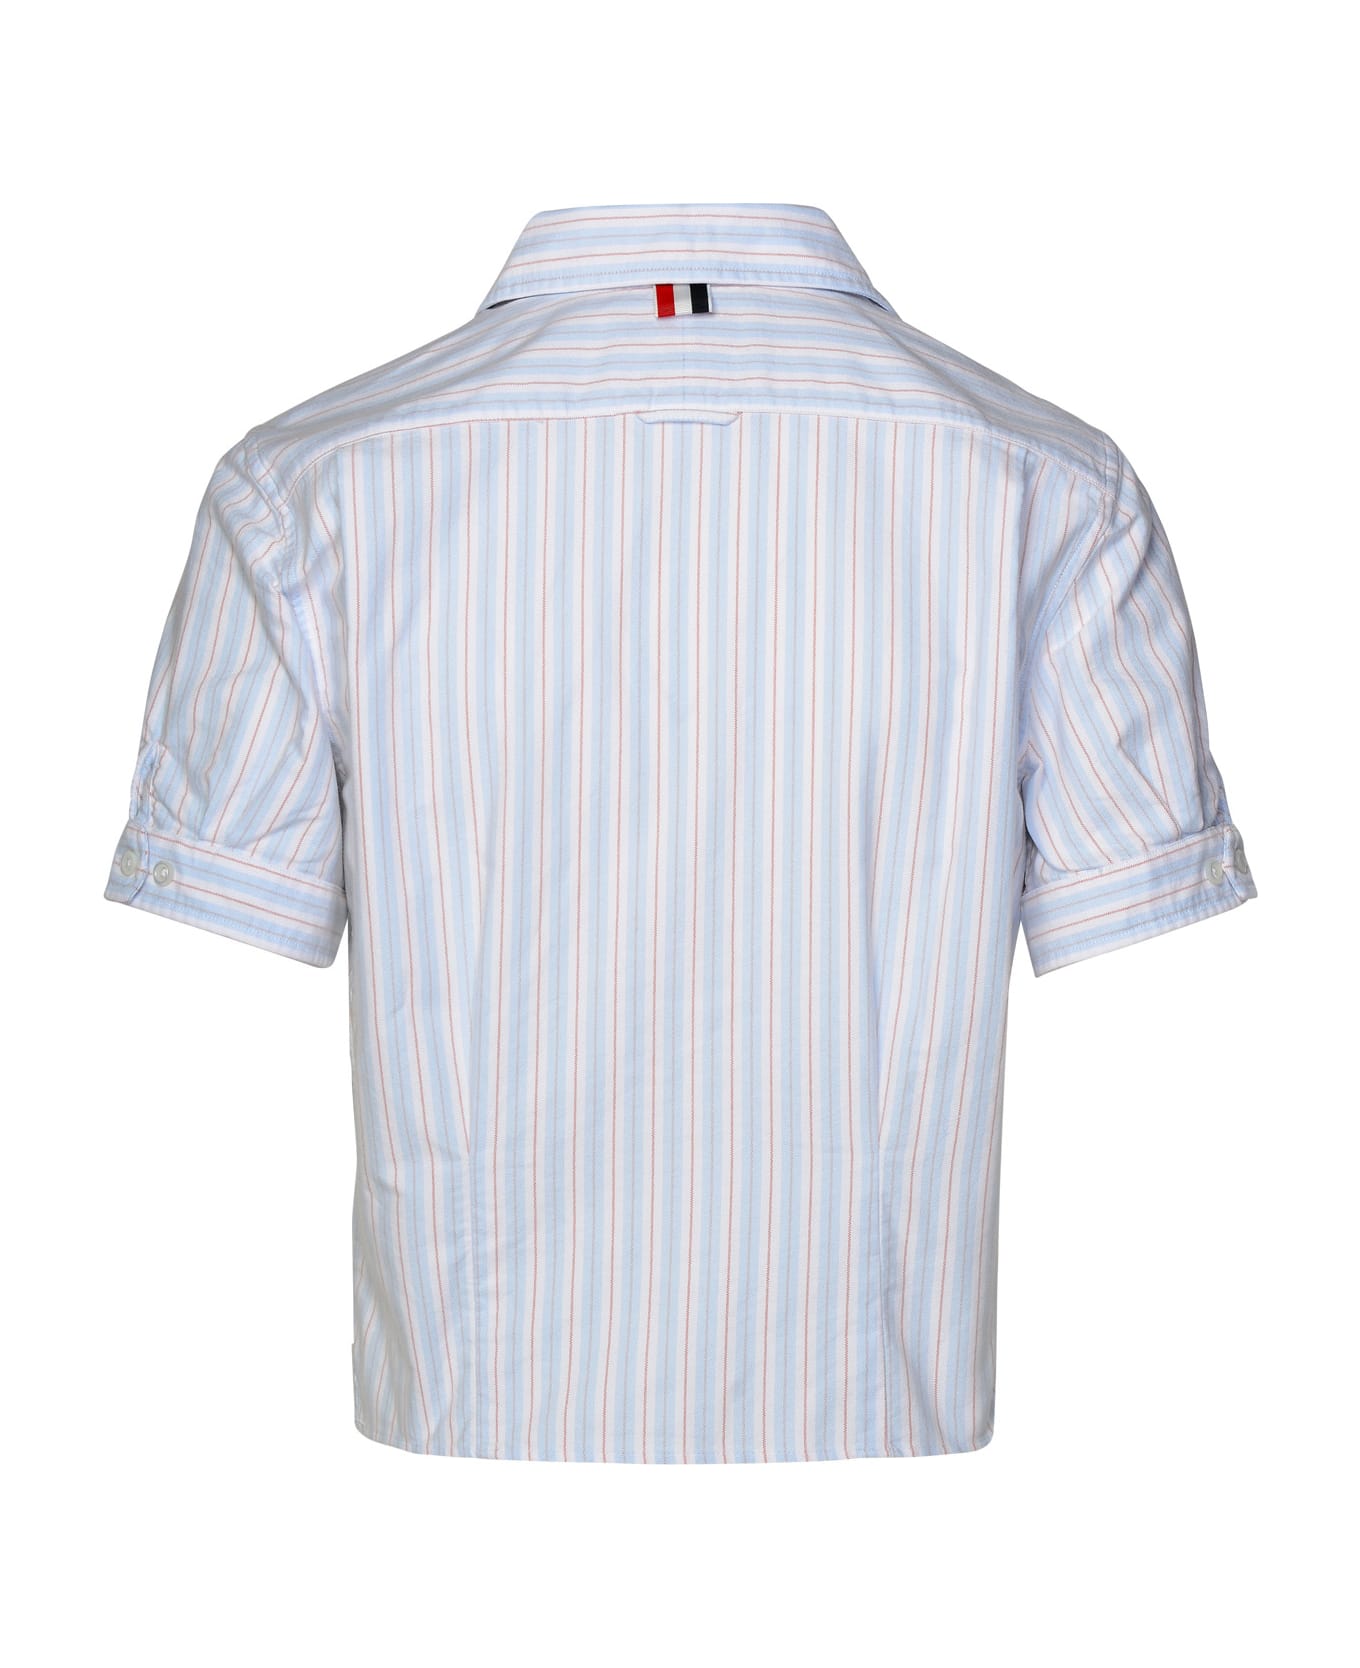 Thom Browne Multicolor Cotton Shirt - Light Blue